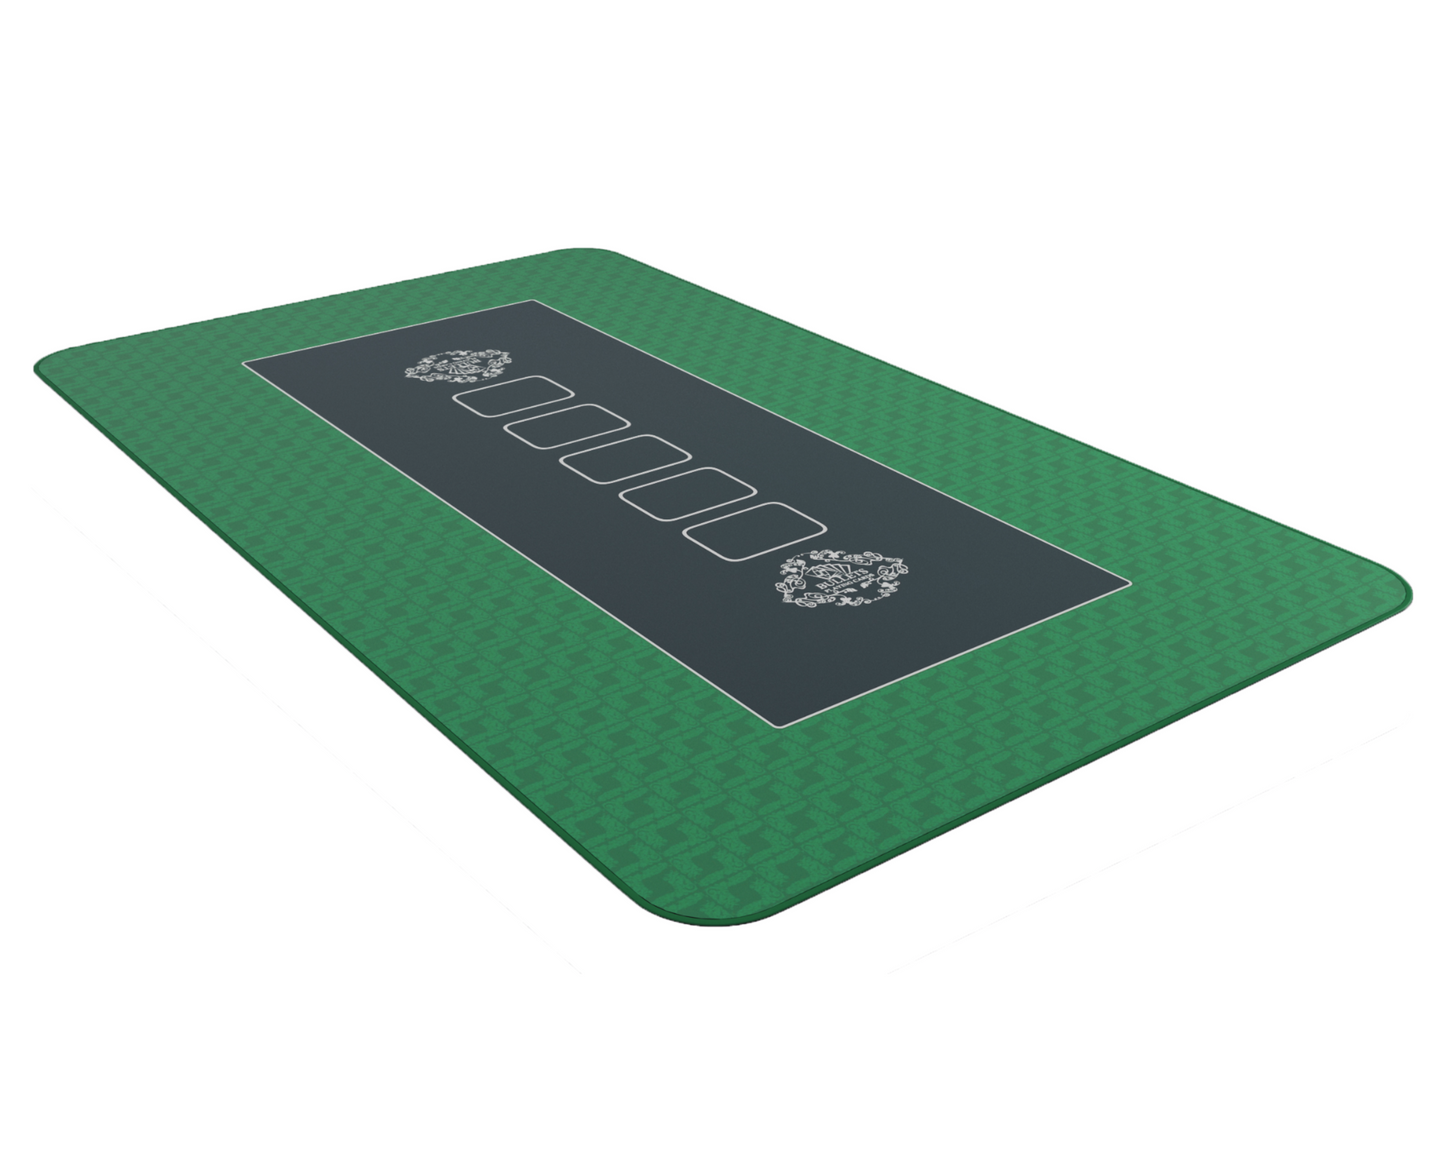 Poker mat 140x75 cm, square